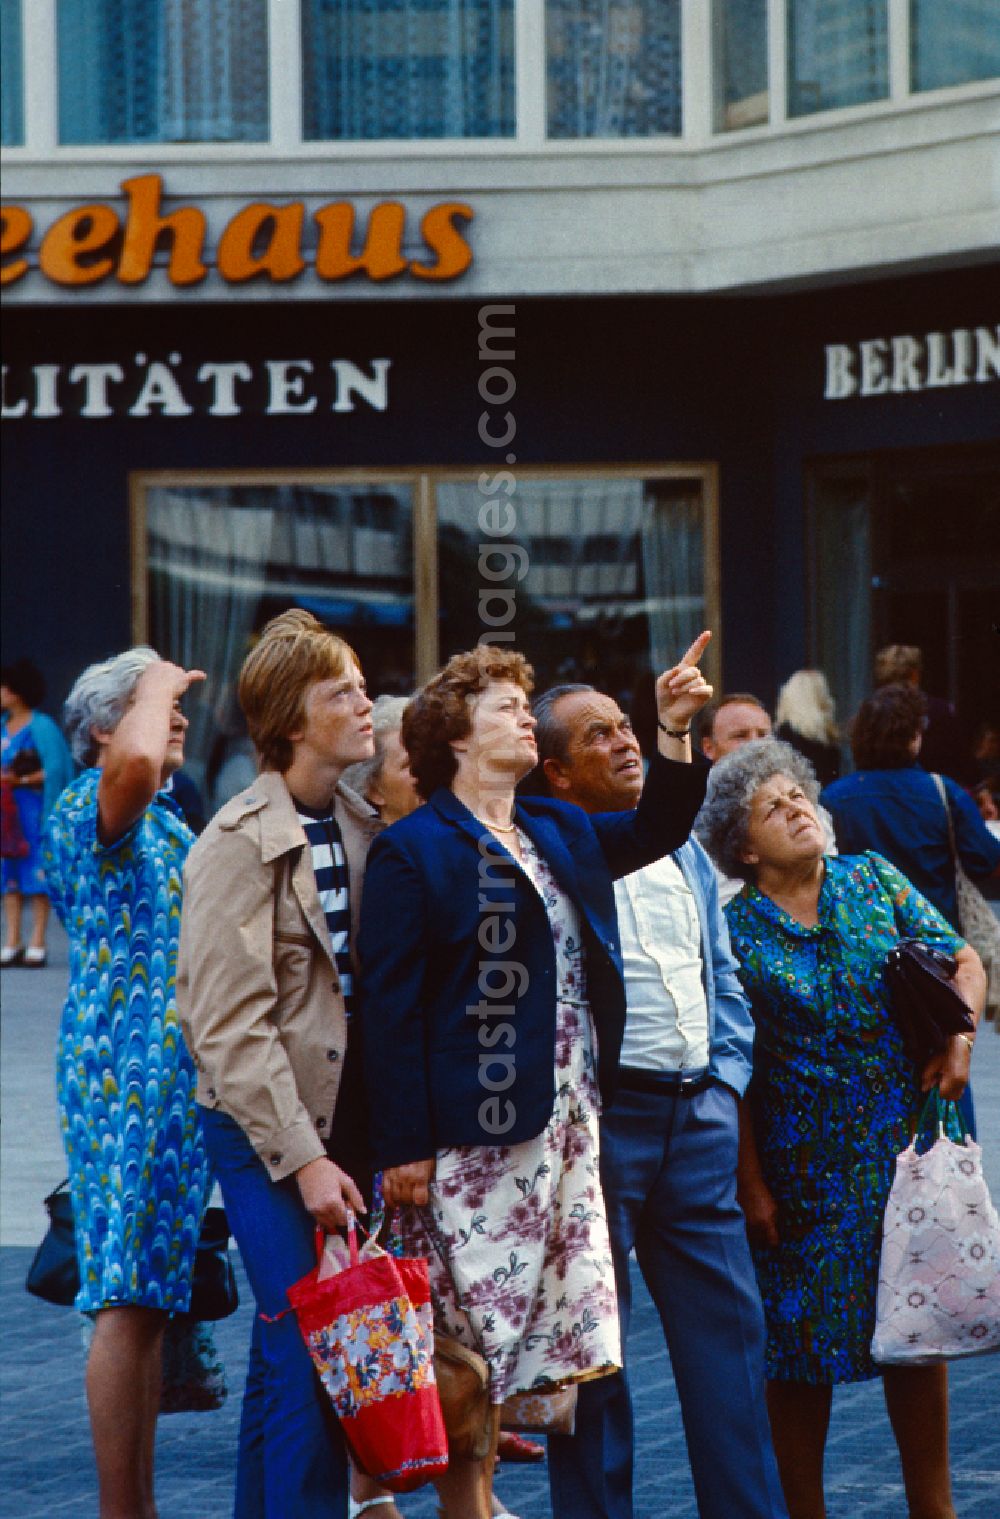 GDR image archive: Berlin - People on Alexanderplatz in East Berlin in the area of the former GDR, German Democratic Republic